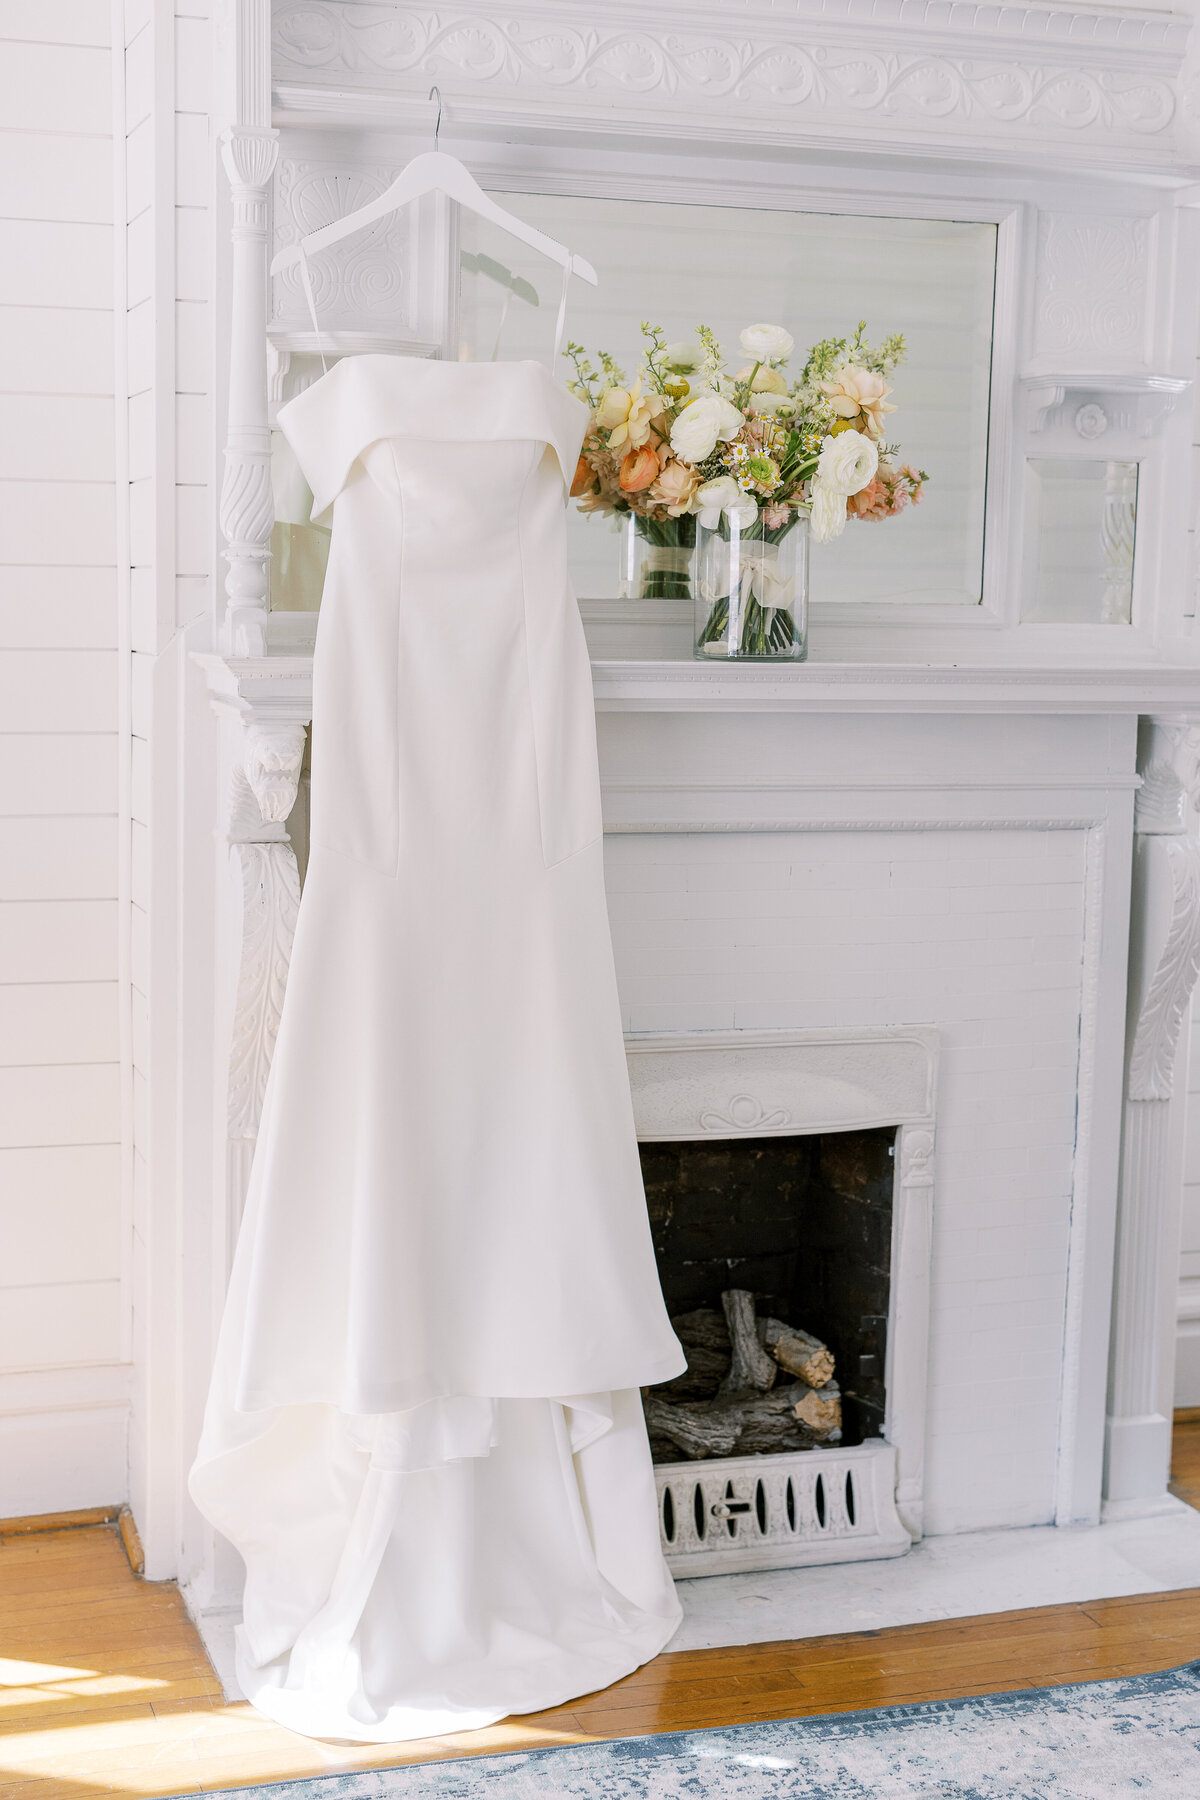 Wedding dress draped next to a fireplace